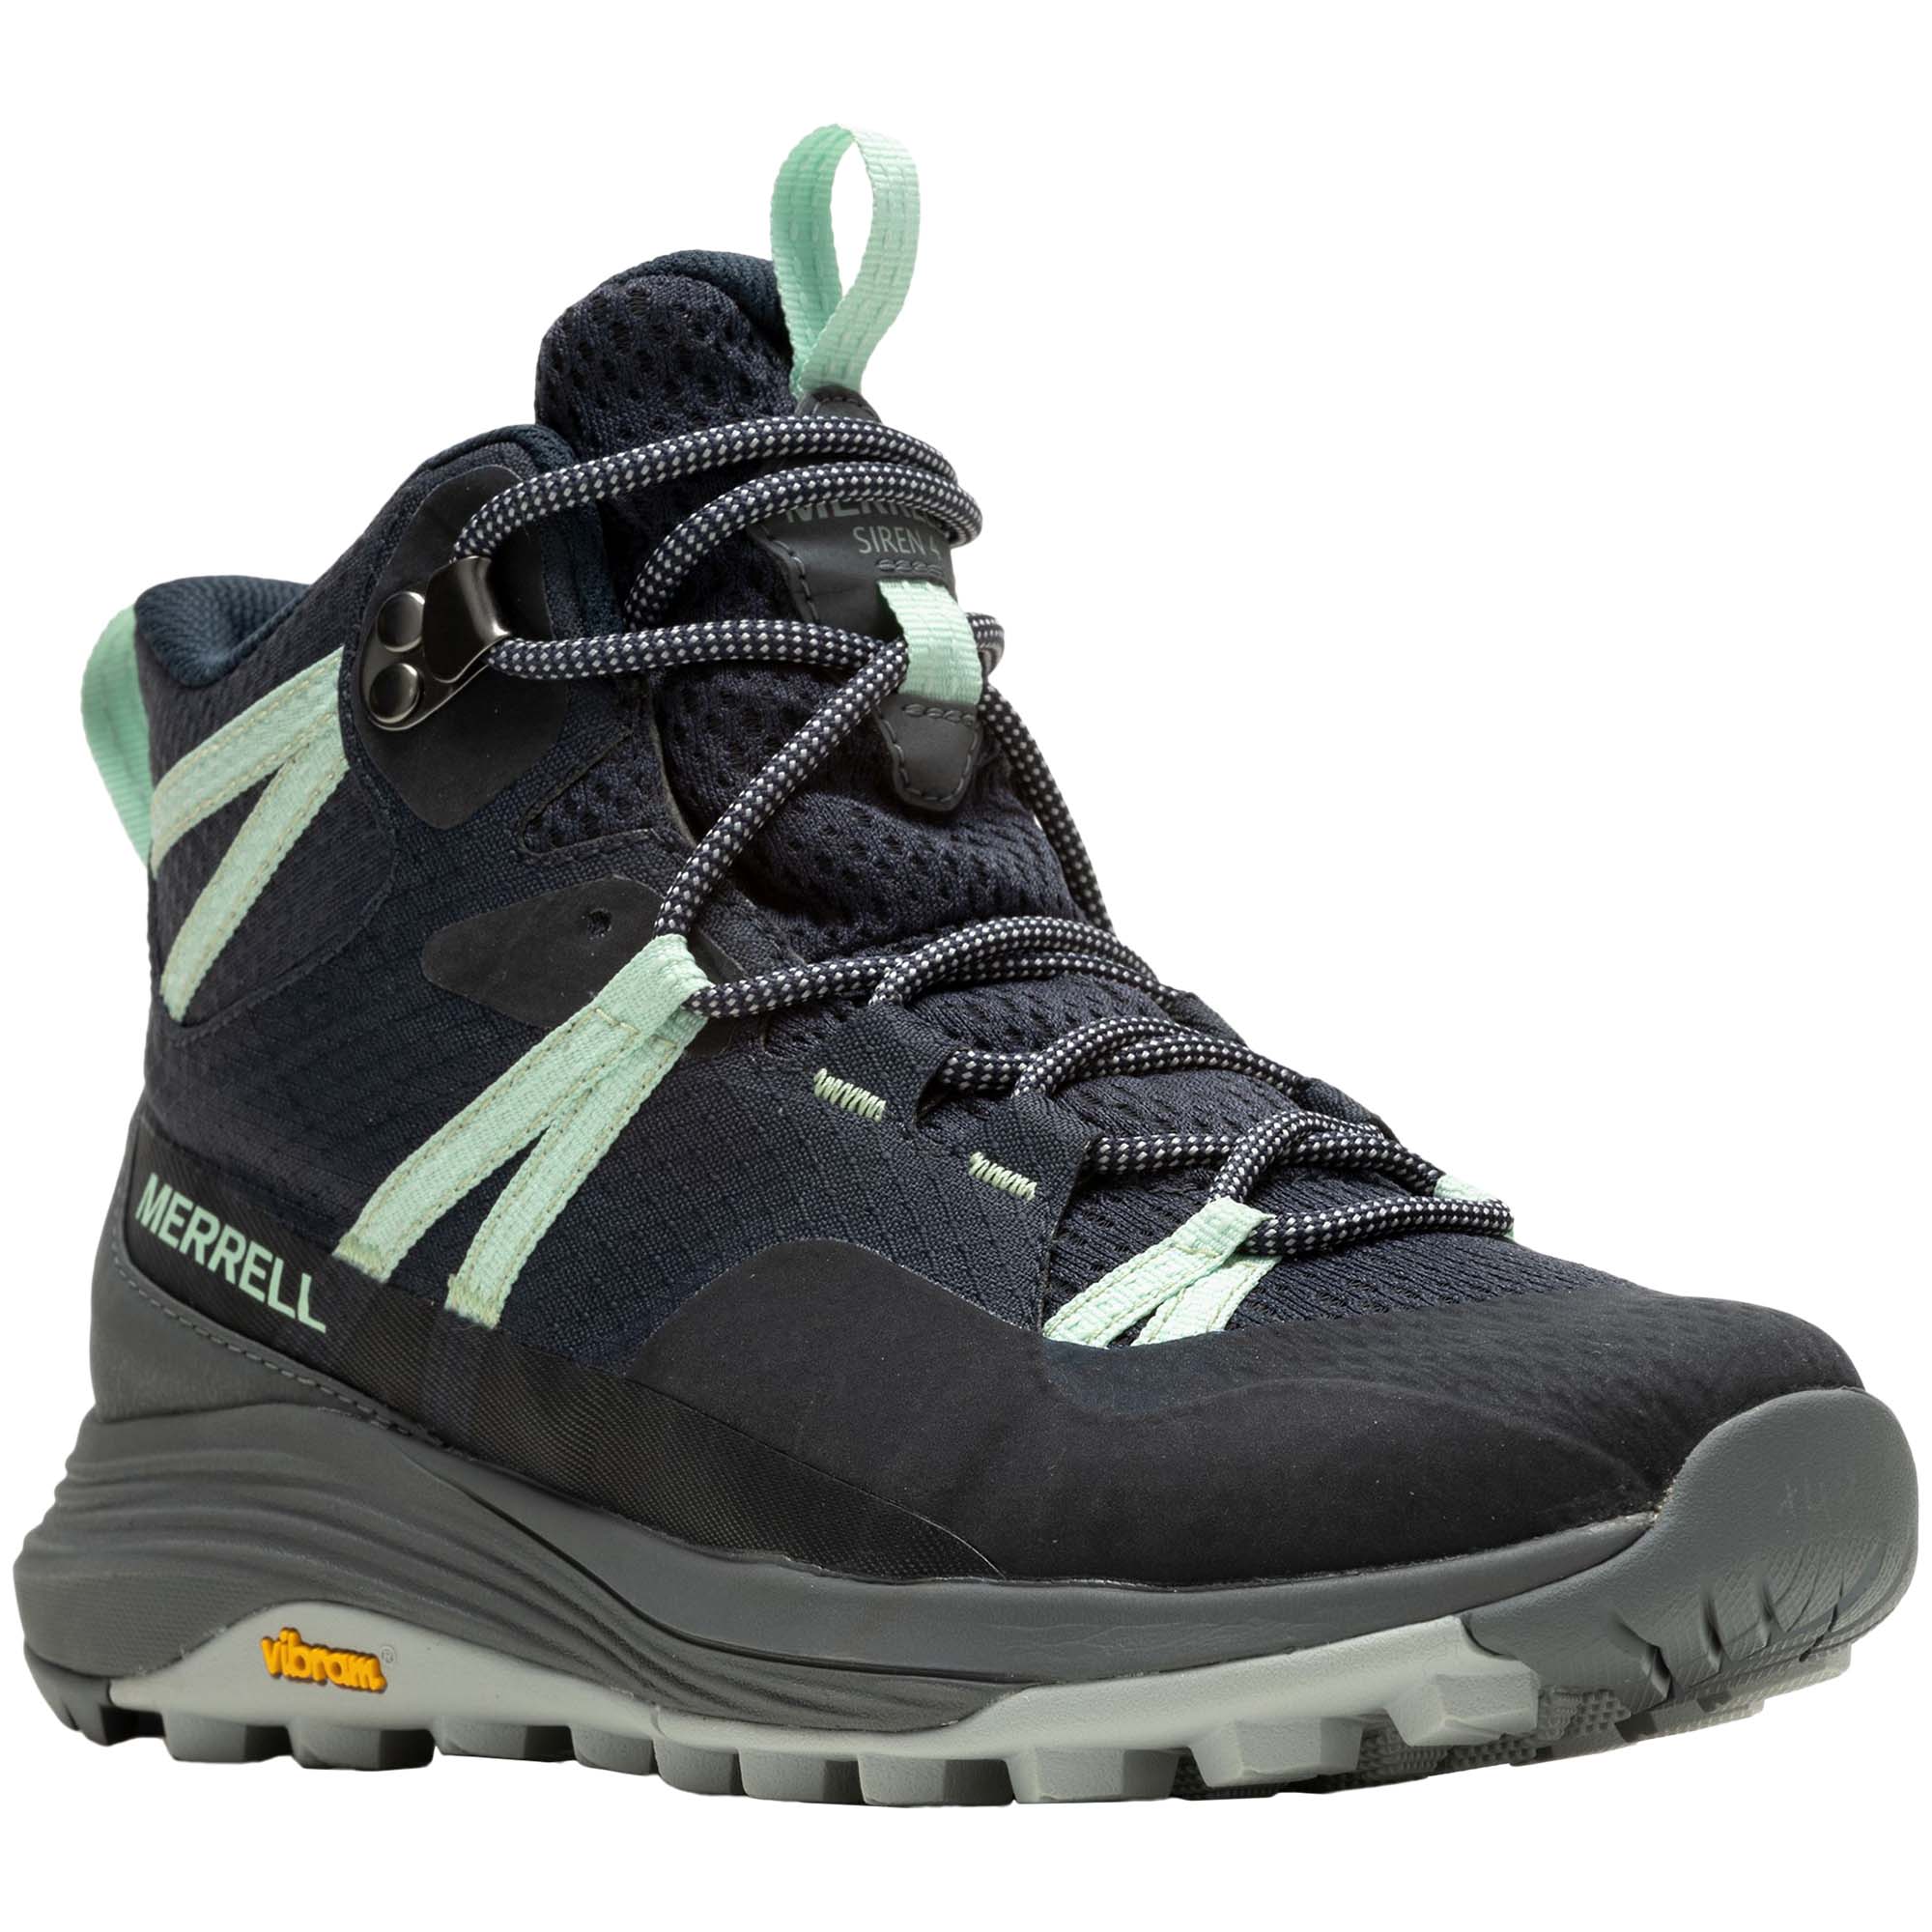 Merrell Siren 4 Mid GTX Women's Hiking Boots